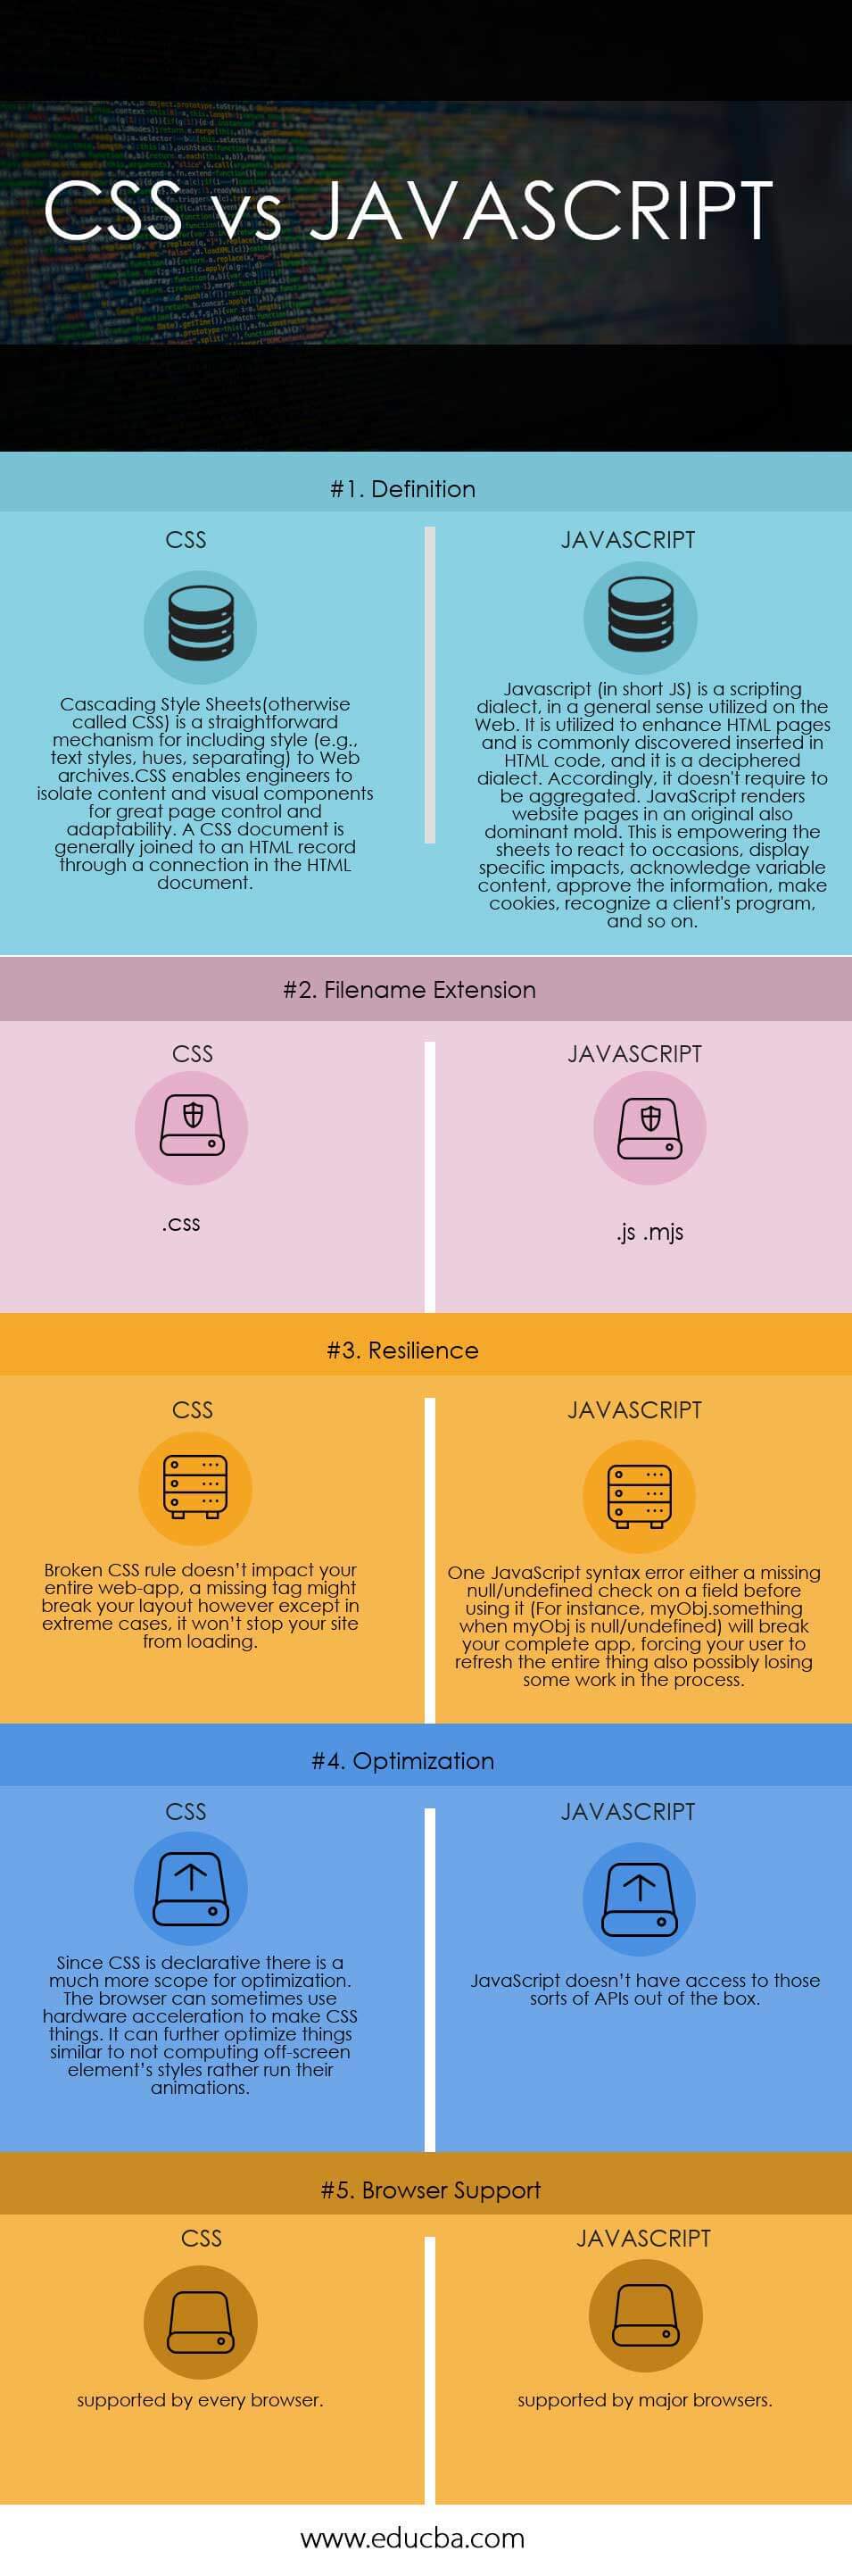 CSS-vs-JAVASCRIPT info